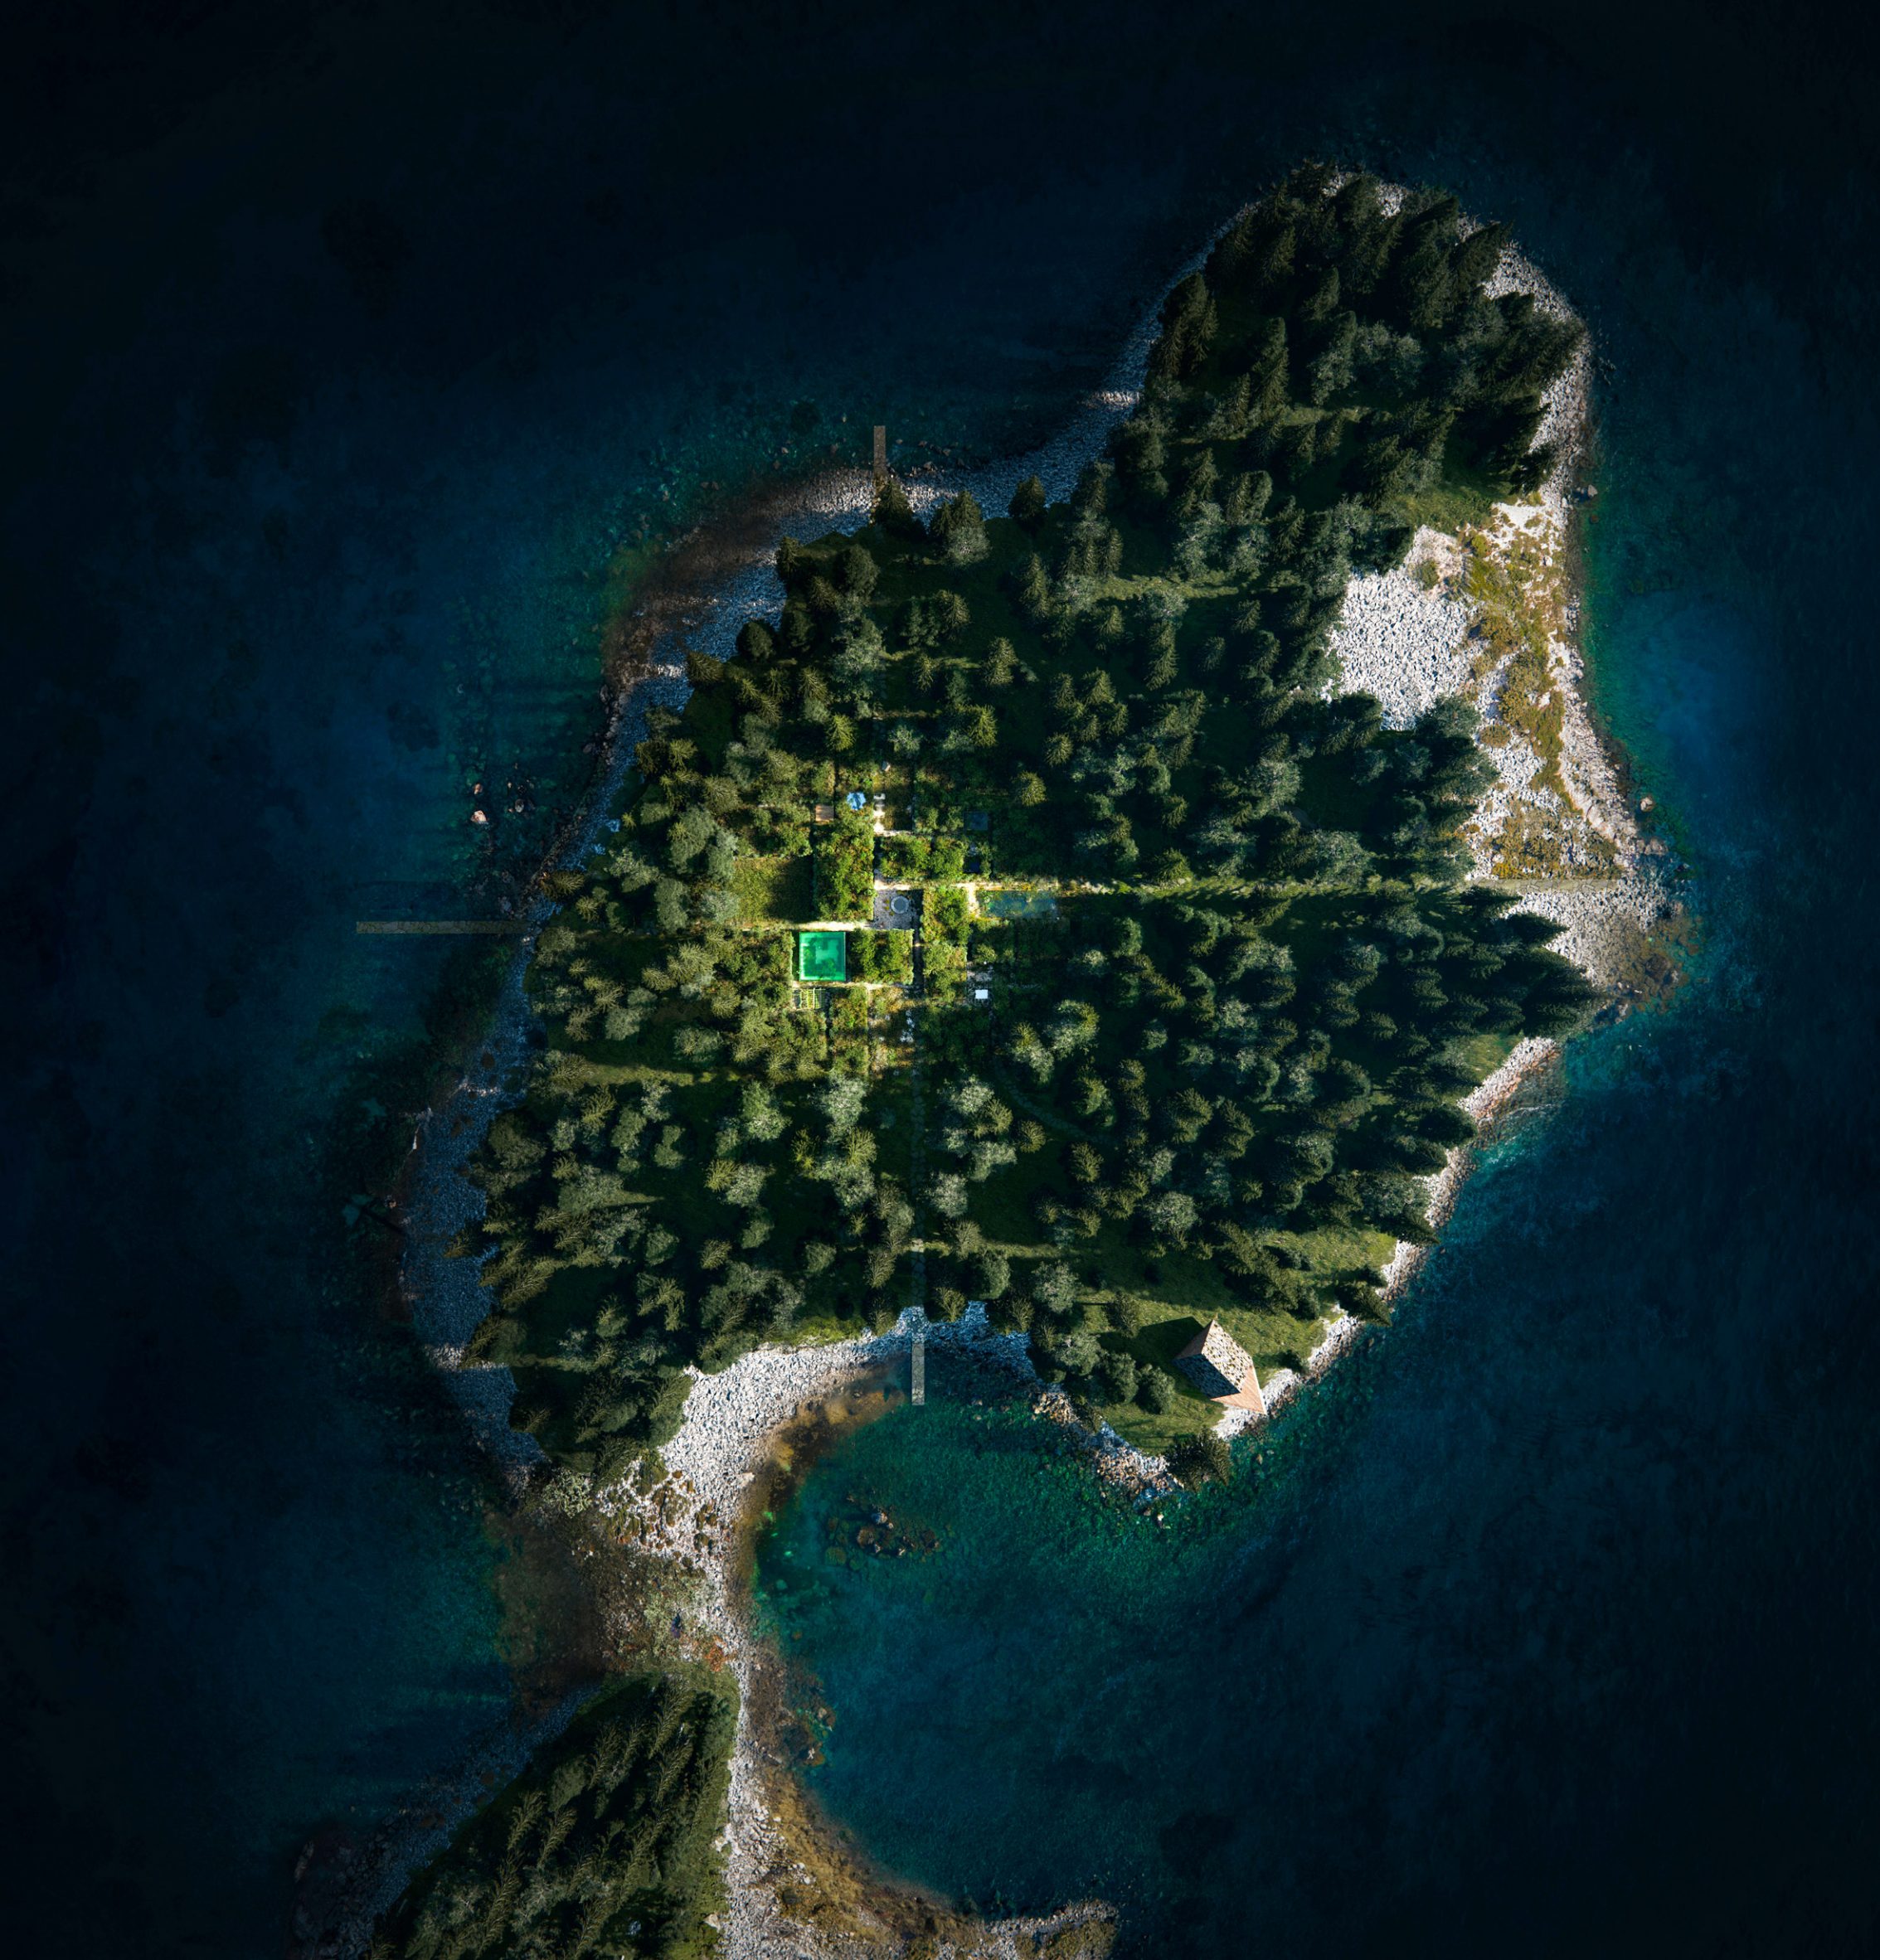 Bjarke Ingels designs Vollebak Island to demonstrate "philosophy of hedonistic sustainability"